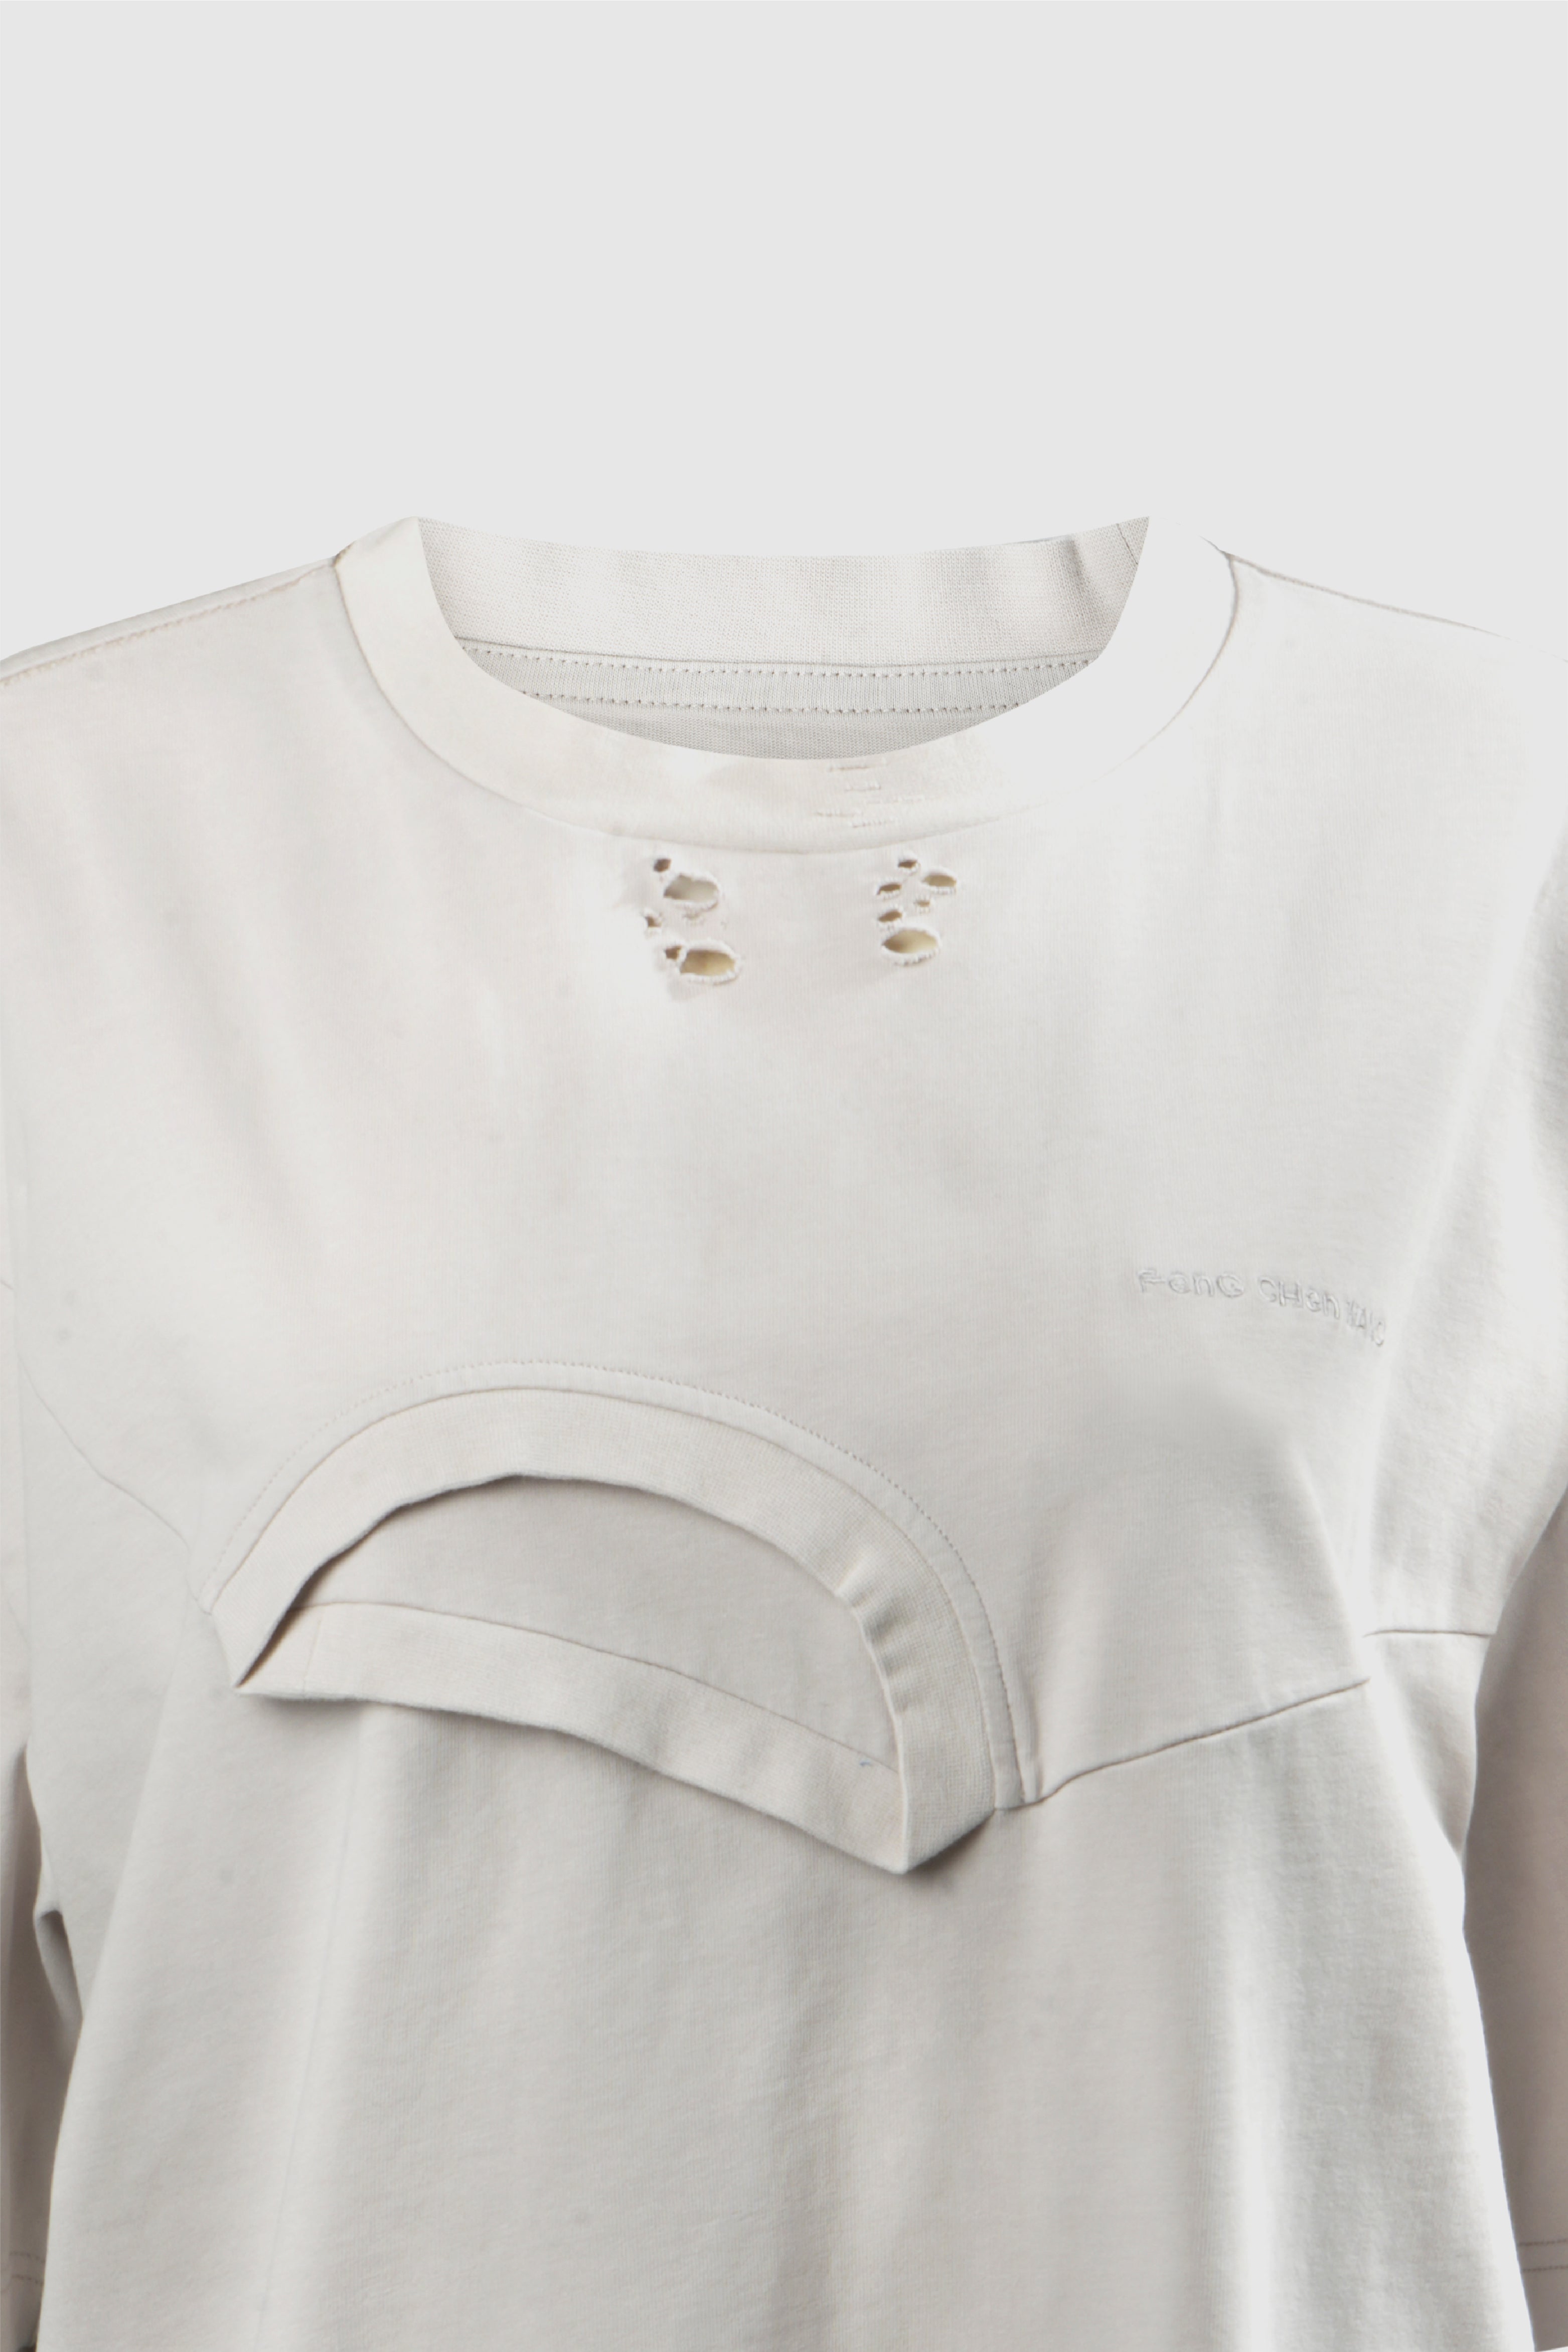 Selectshop FRAME - FENG CHEN WANG Distressed T-Shirt T-Shirts Concept Store Dubai